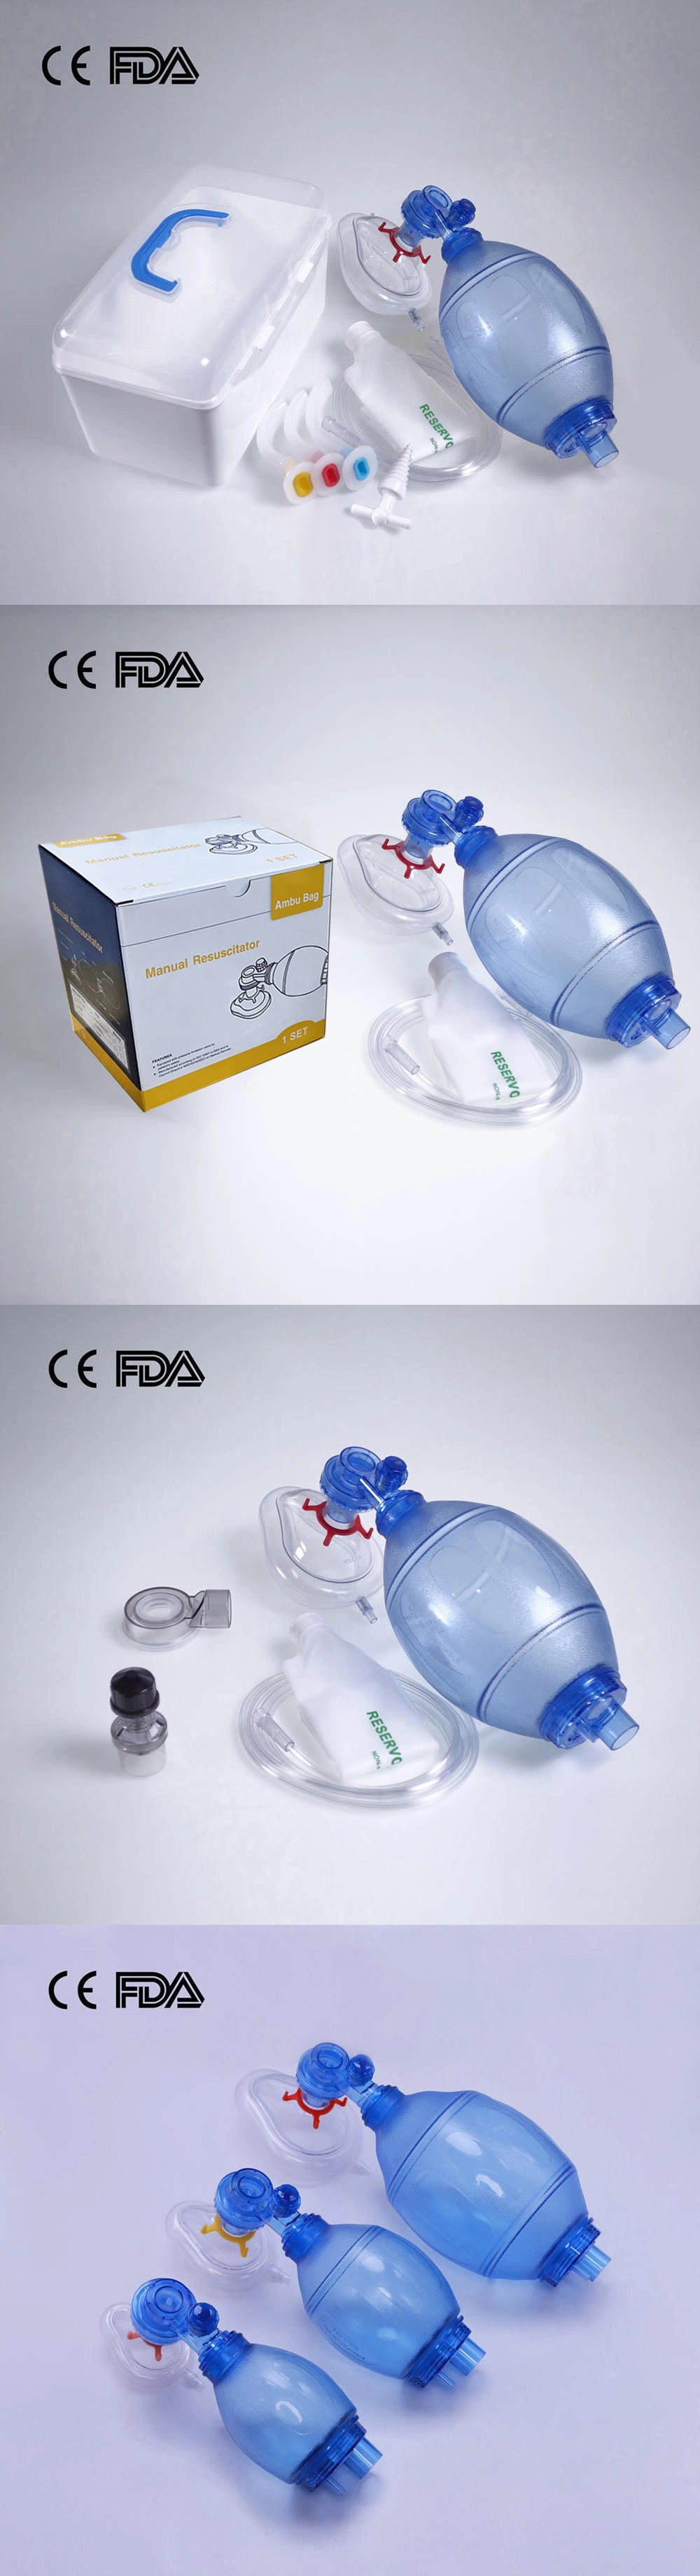 PVC Ambu Bag with Oxygen Tube PVC Manual Resuscitator Kit Set Factory with CE, FDA for Adult Size